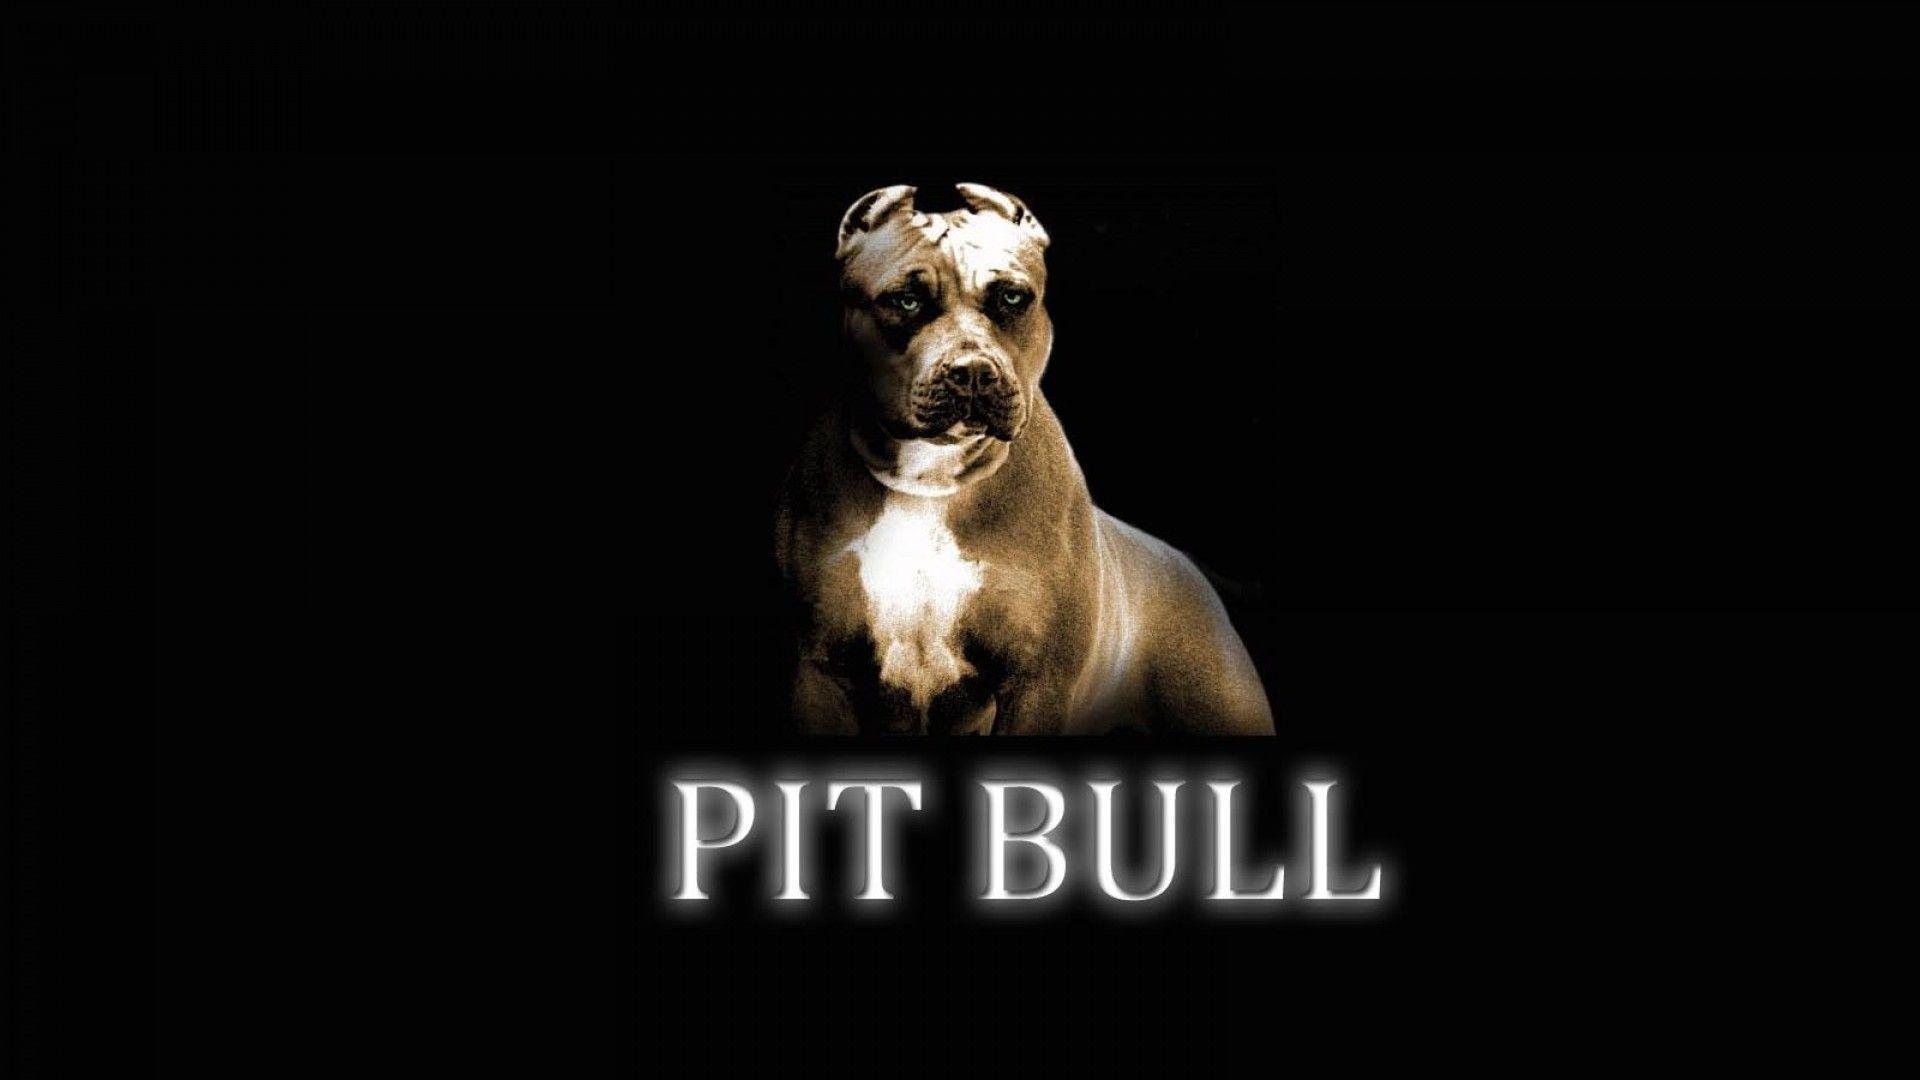 Pitbull Dog New Wallpaper. Pitbull Dog Picture Free Download